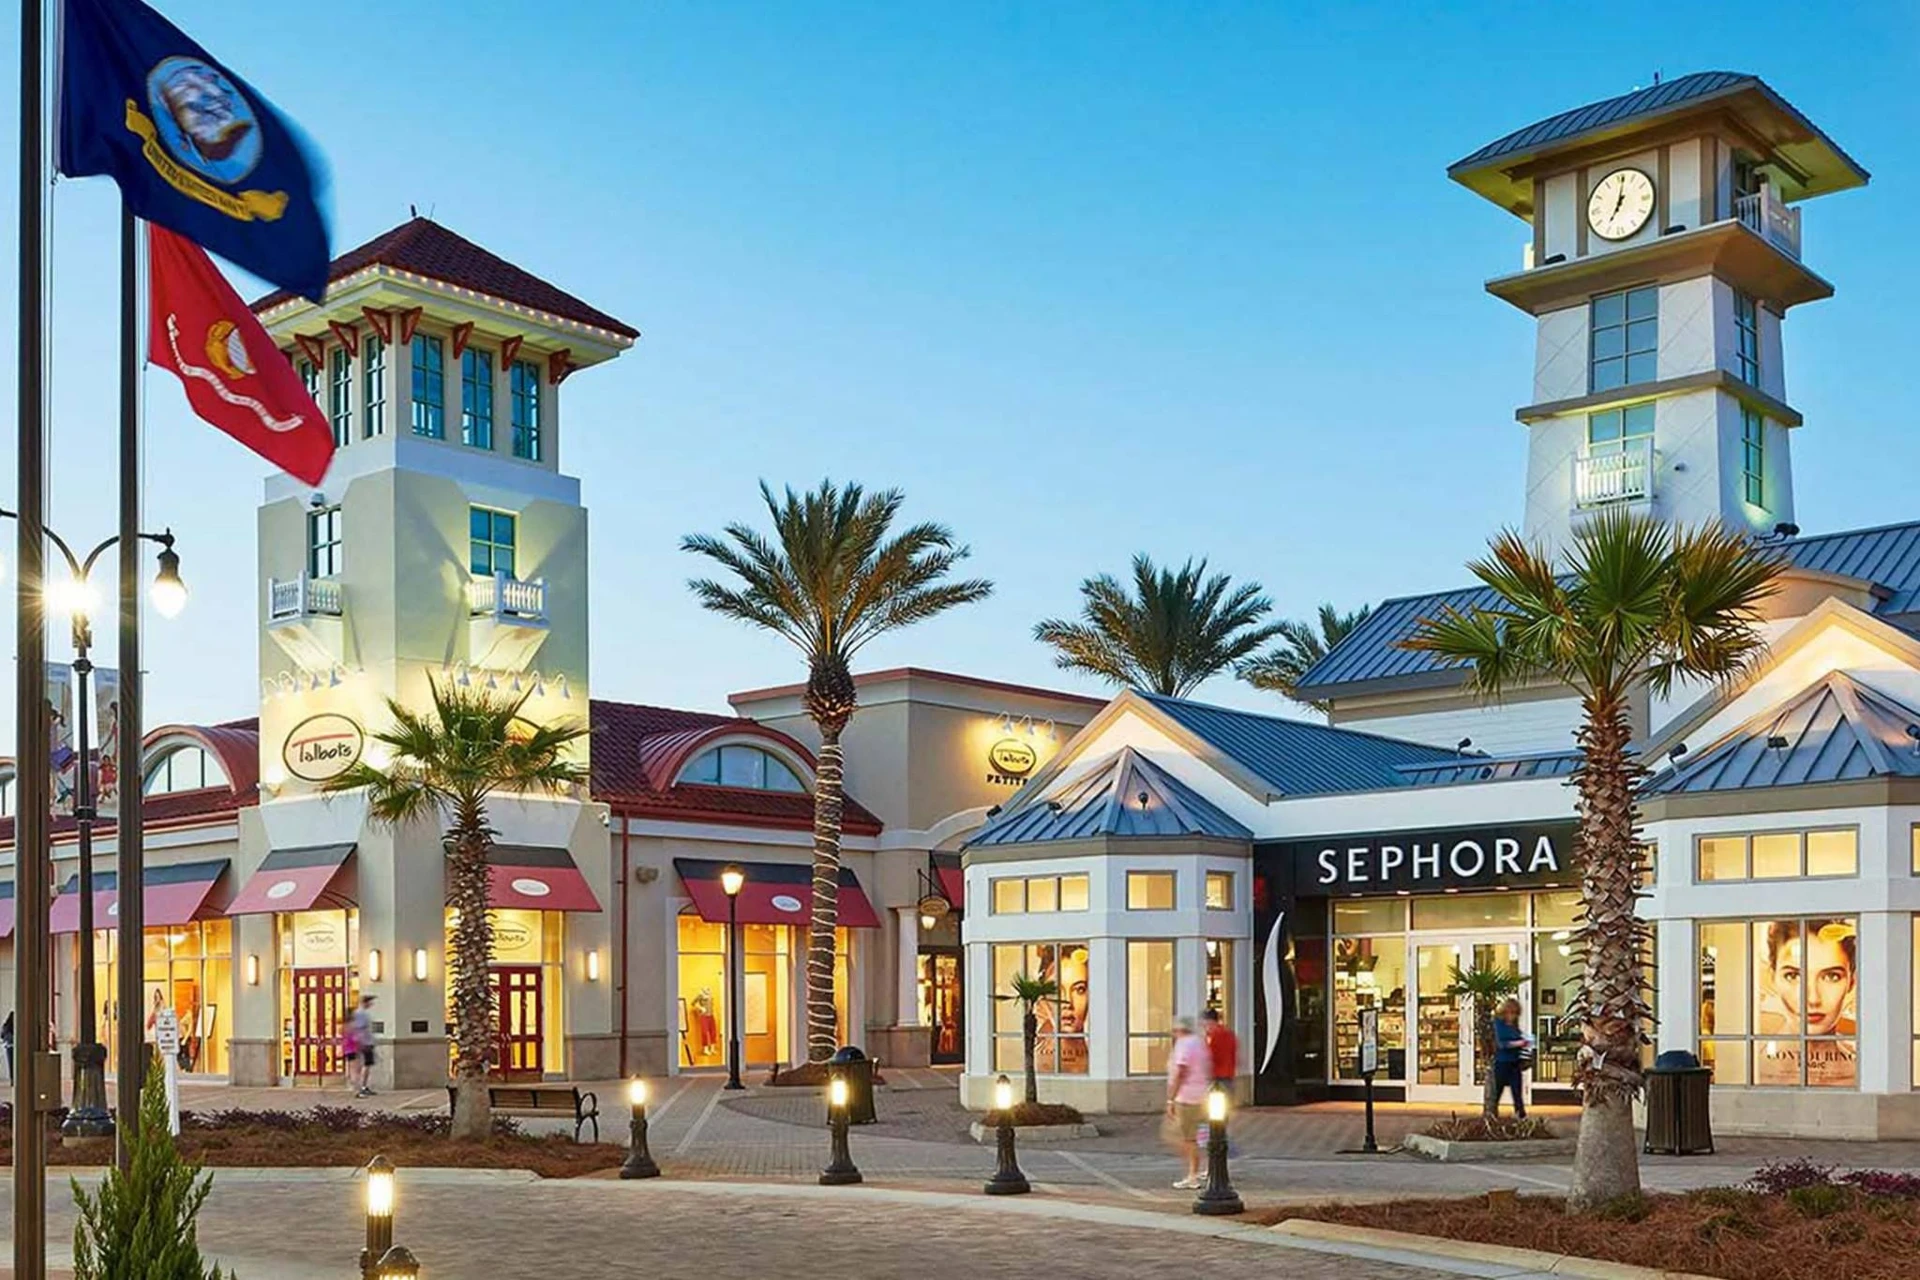 Destin Commons Shopping Mall, Destin, Florida